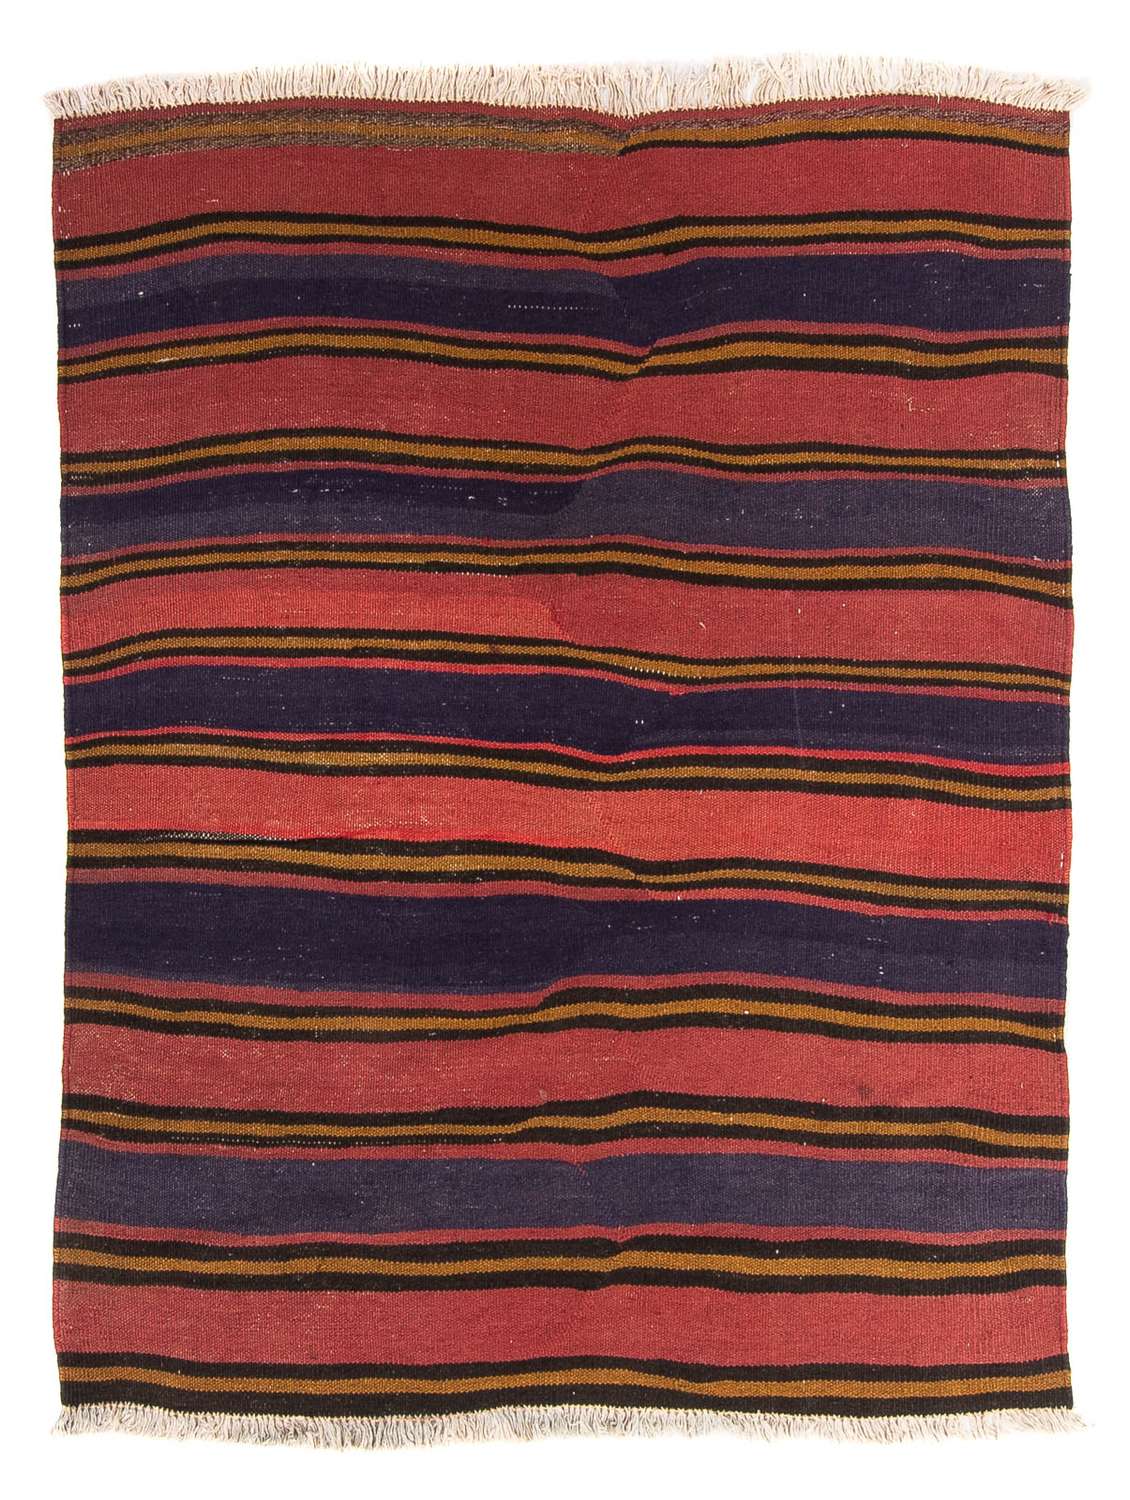 Kelim Rug - Old - 160 x 130 cm - multicolored